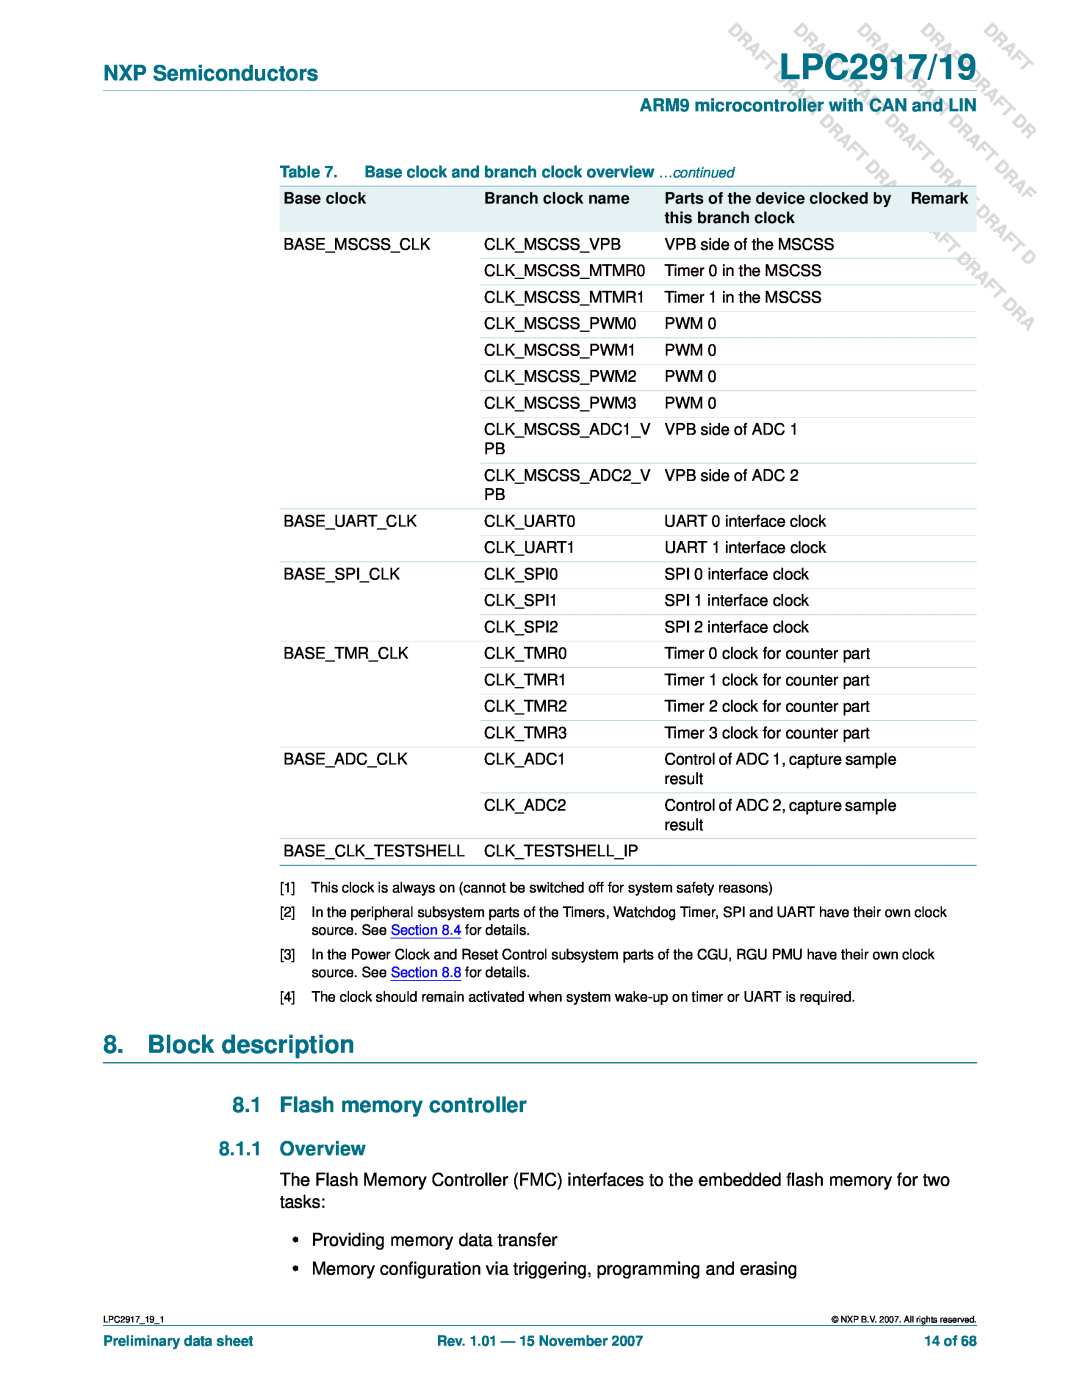 NXP Semiconductors LPC2919 user manual Block description, Overview, DLPC2917/19 